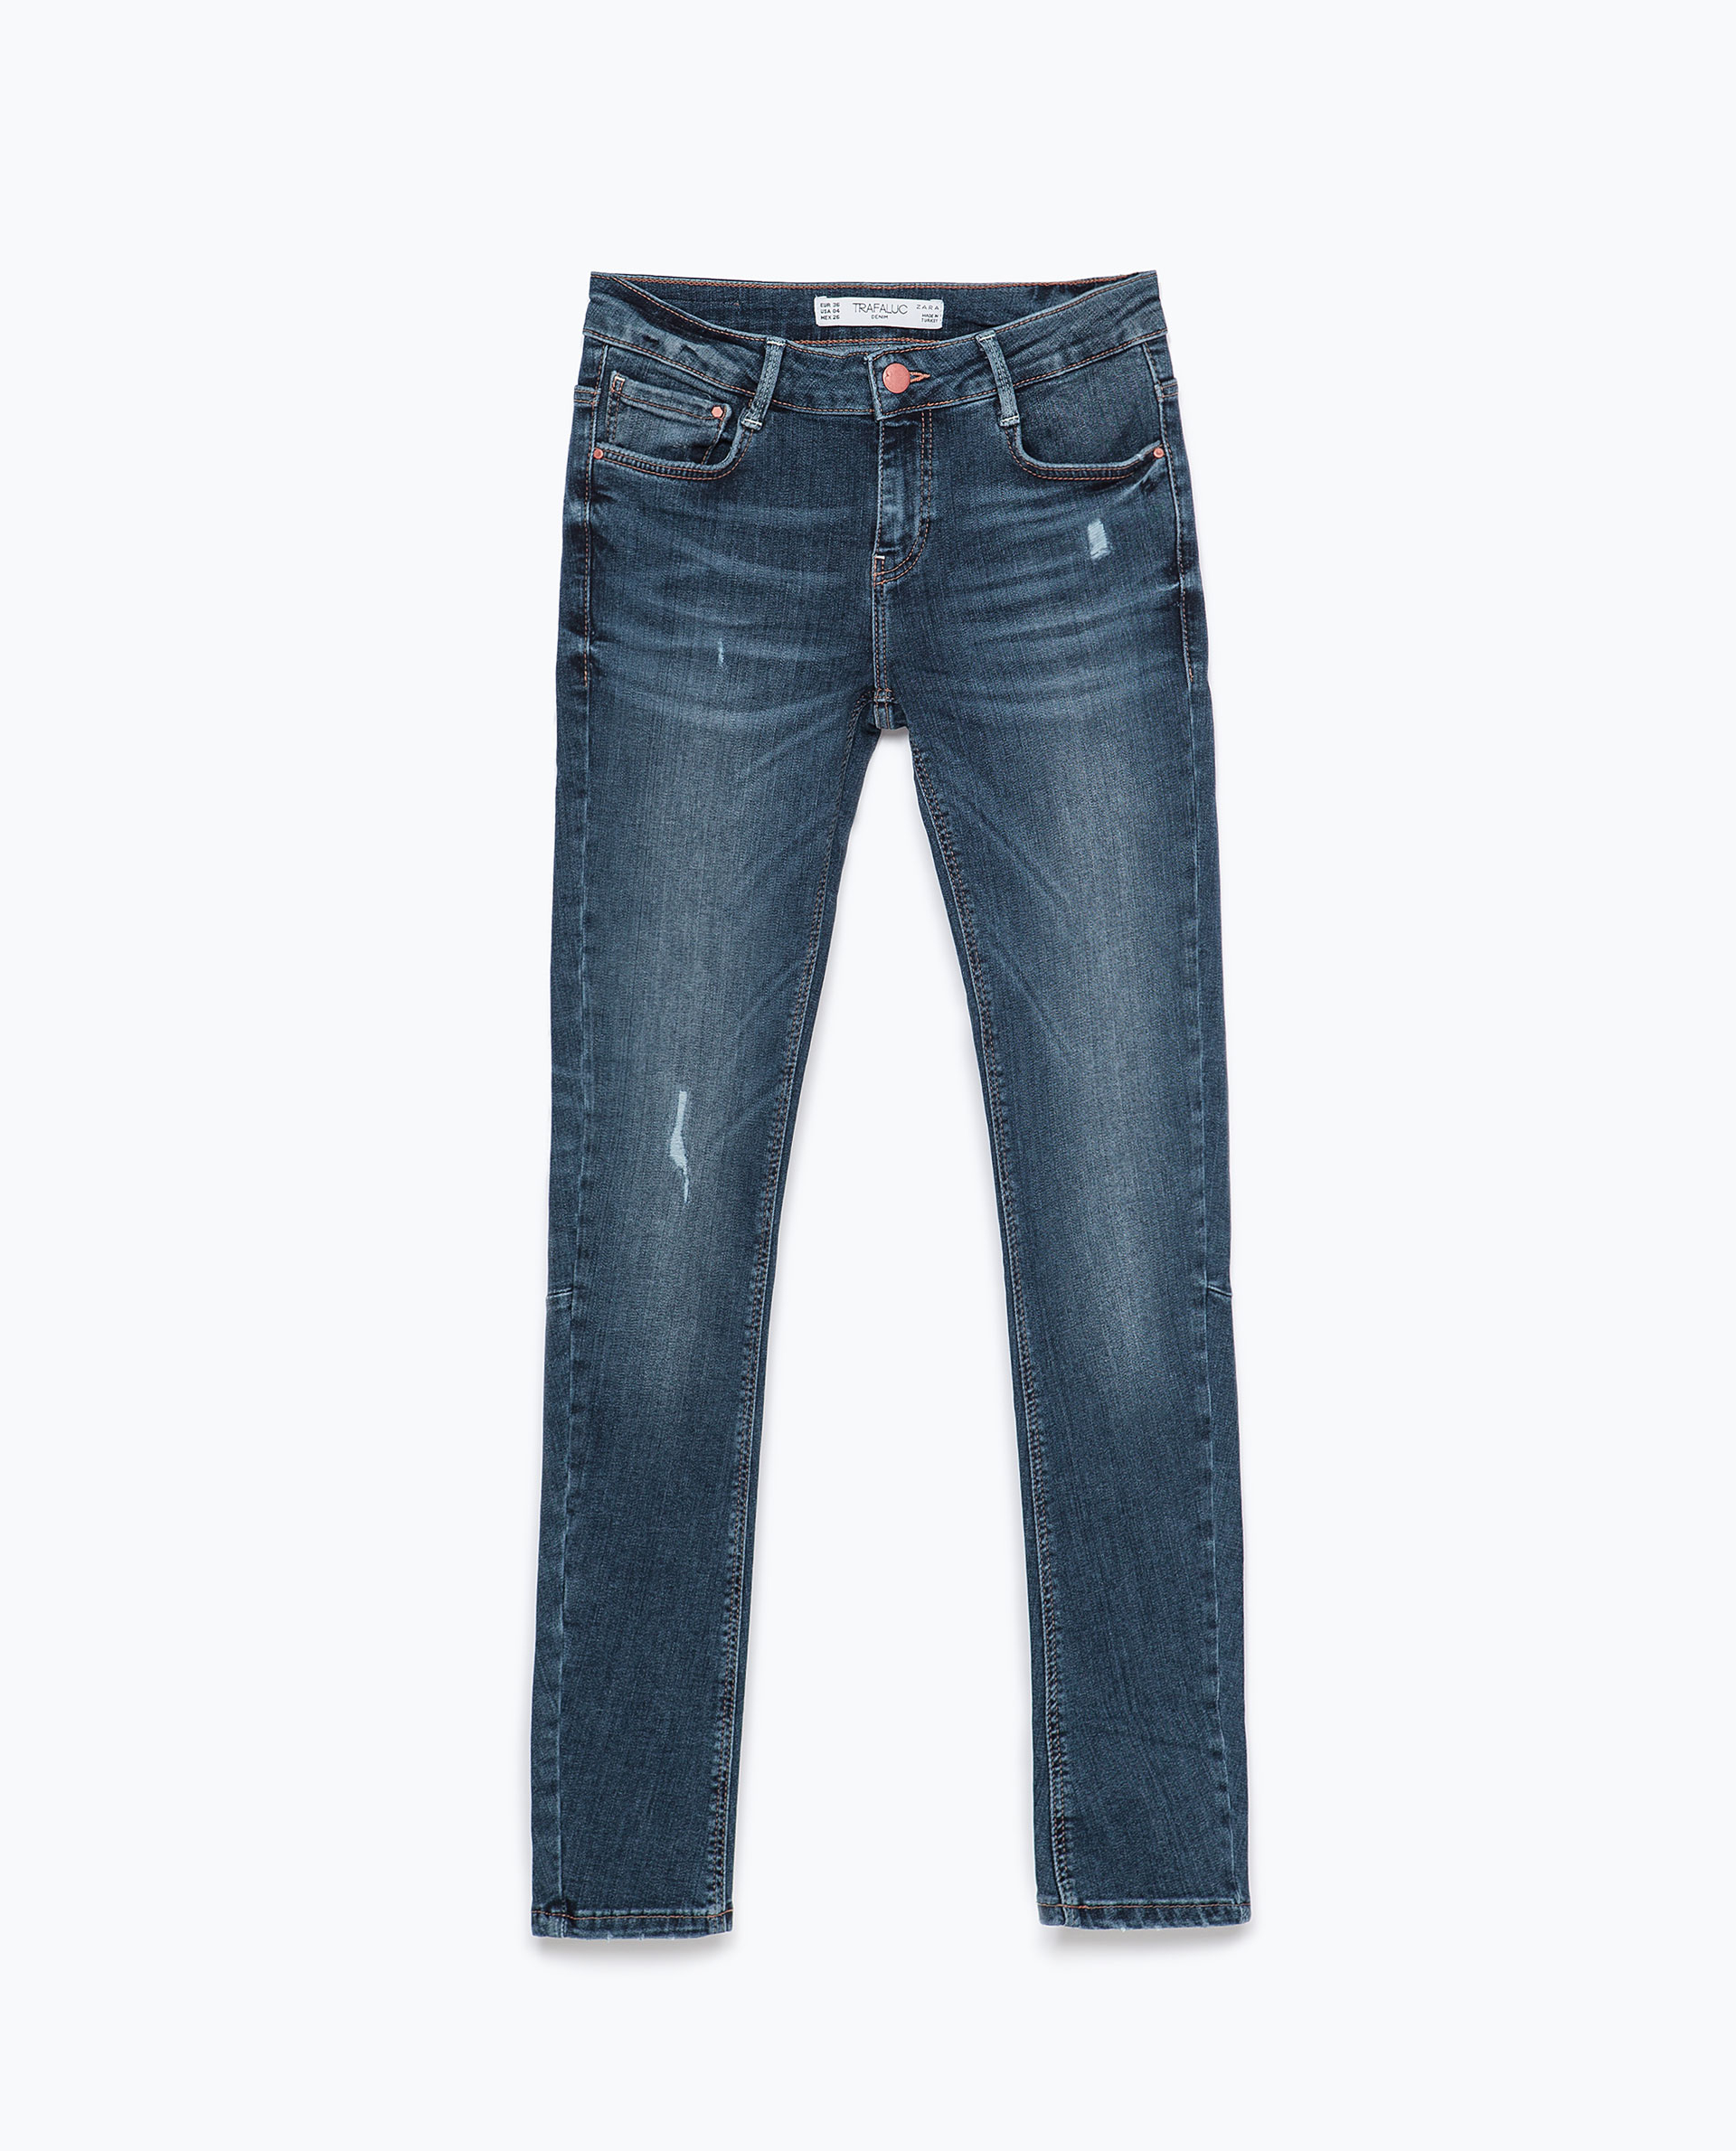 Zara Tight Fit Jeans in Blue (Navy blue) | Lyst